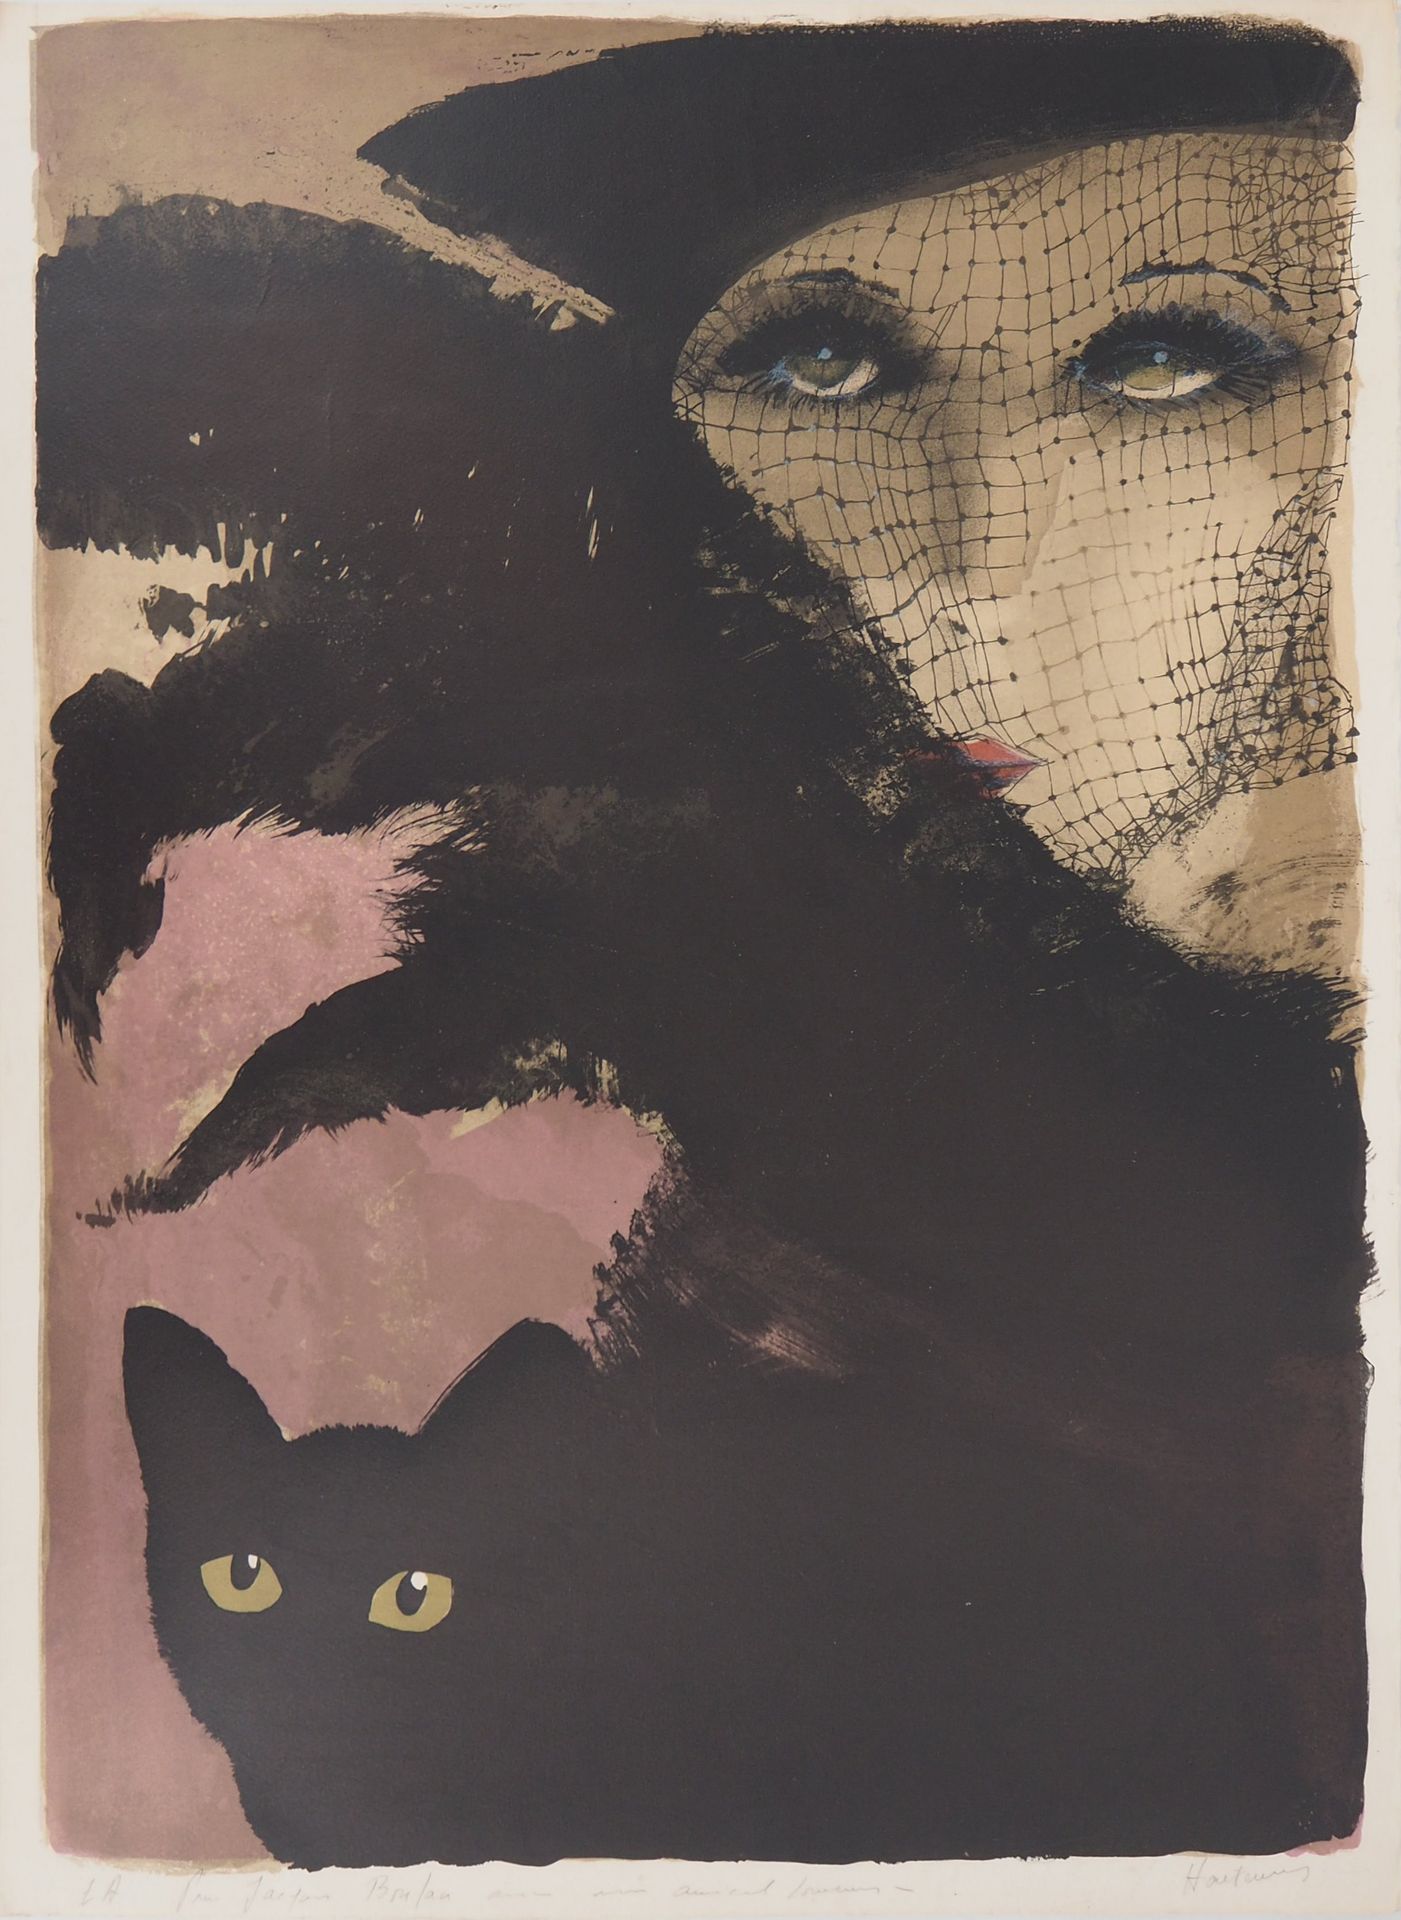 Arnaud d'HAUTERIVES 阿尔诺-德豪特里维斯(1933-2018)

女人和一只猫

原始石版画

用铅笔签名

合理的艺术家证明

在拱形牛皮&hellip;